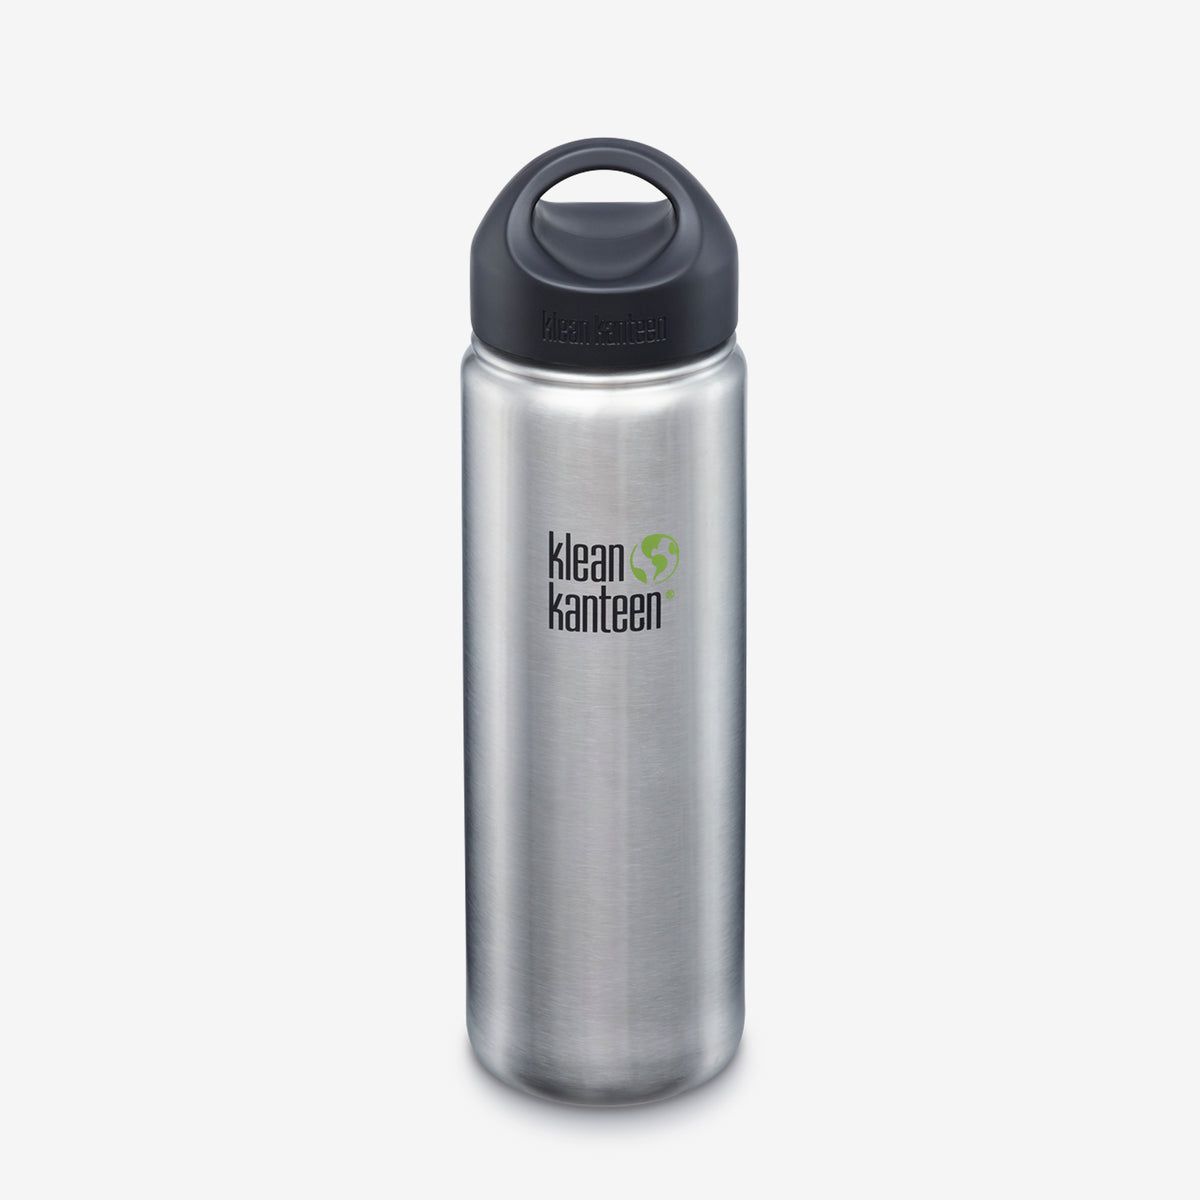 Klean Kanteen Stainless Steel Water Bottle